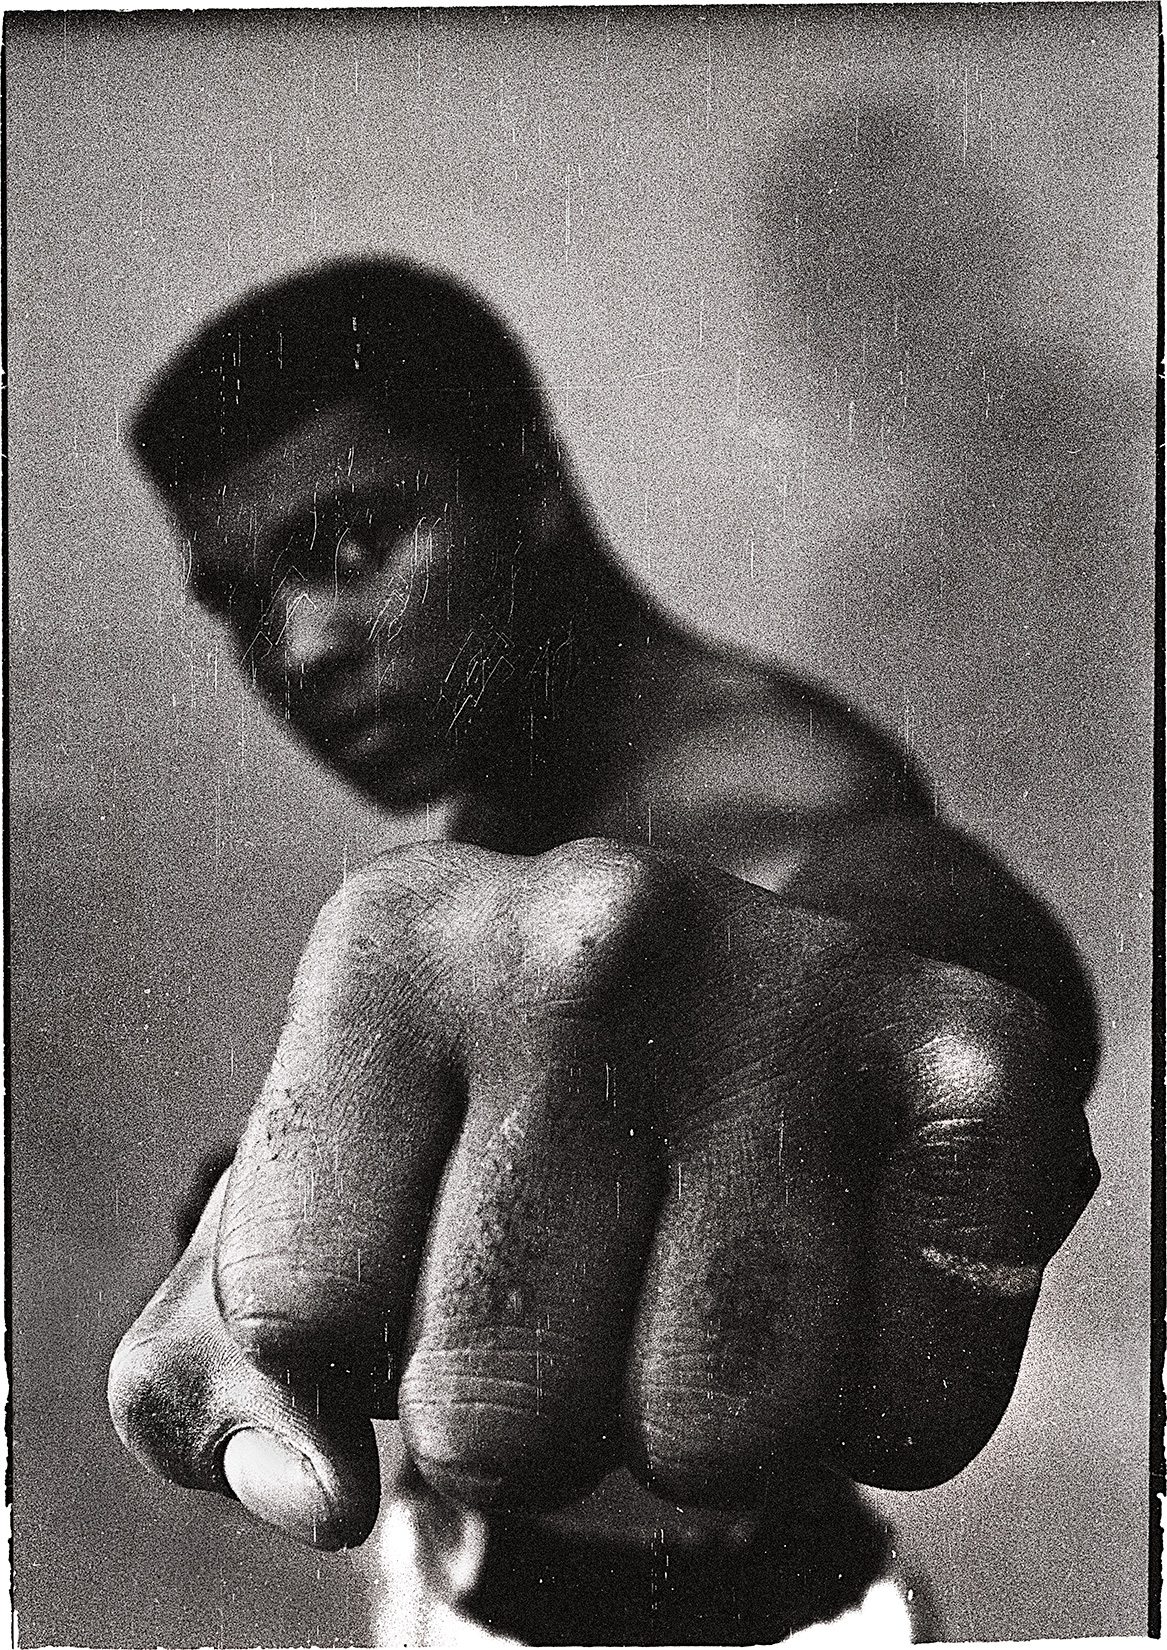 Muhammad Ali, world heavyweight champion showing off his left fist. Chicago, USA. 1966. Credit: THOMAS HOEPKER/MAGNUM PHOTOS 